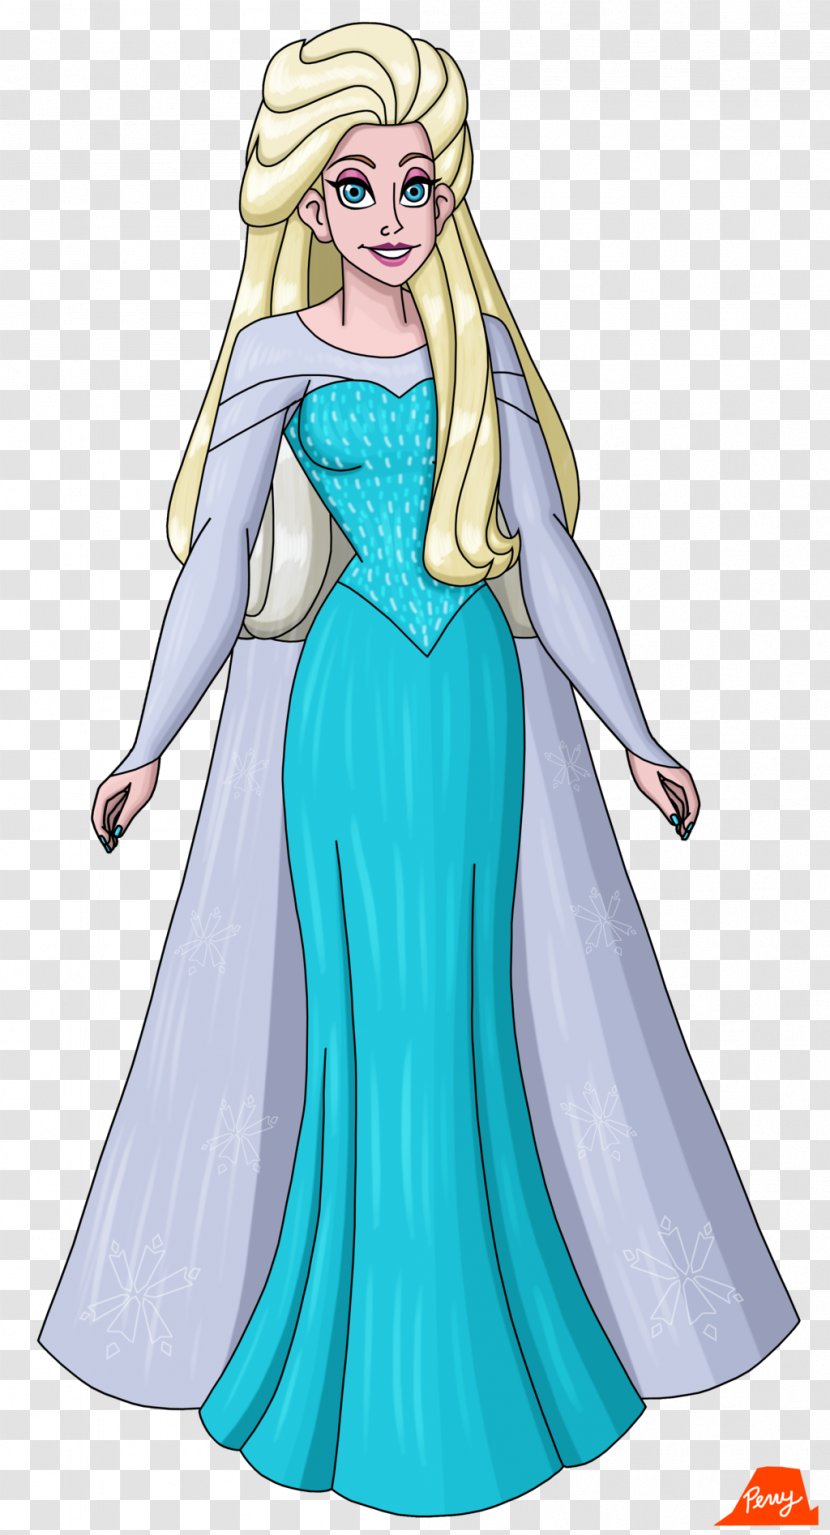 Frozen Elsa DeviantArt Illustration - Silhouette - Hair Transparent PNG